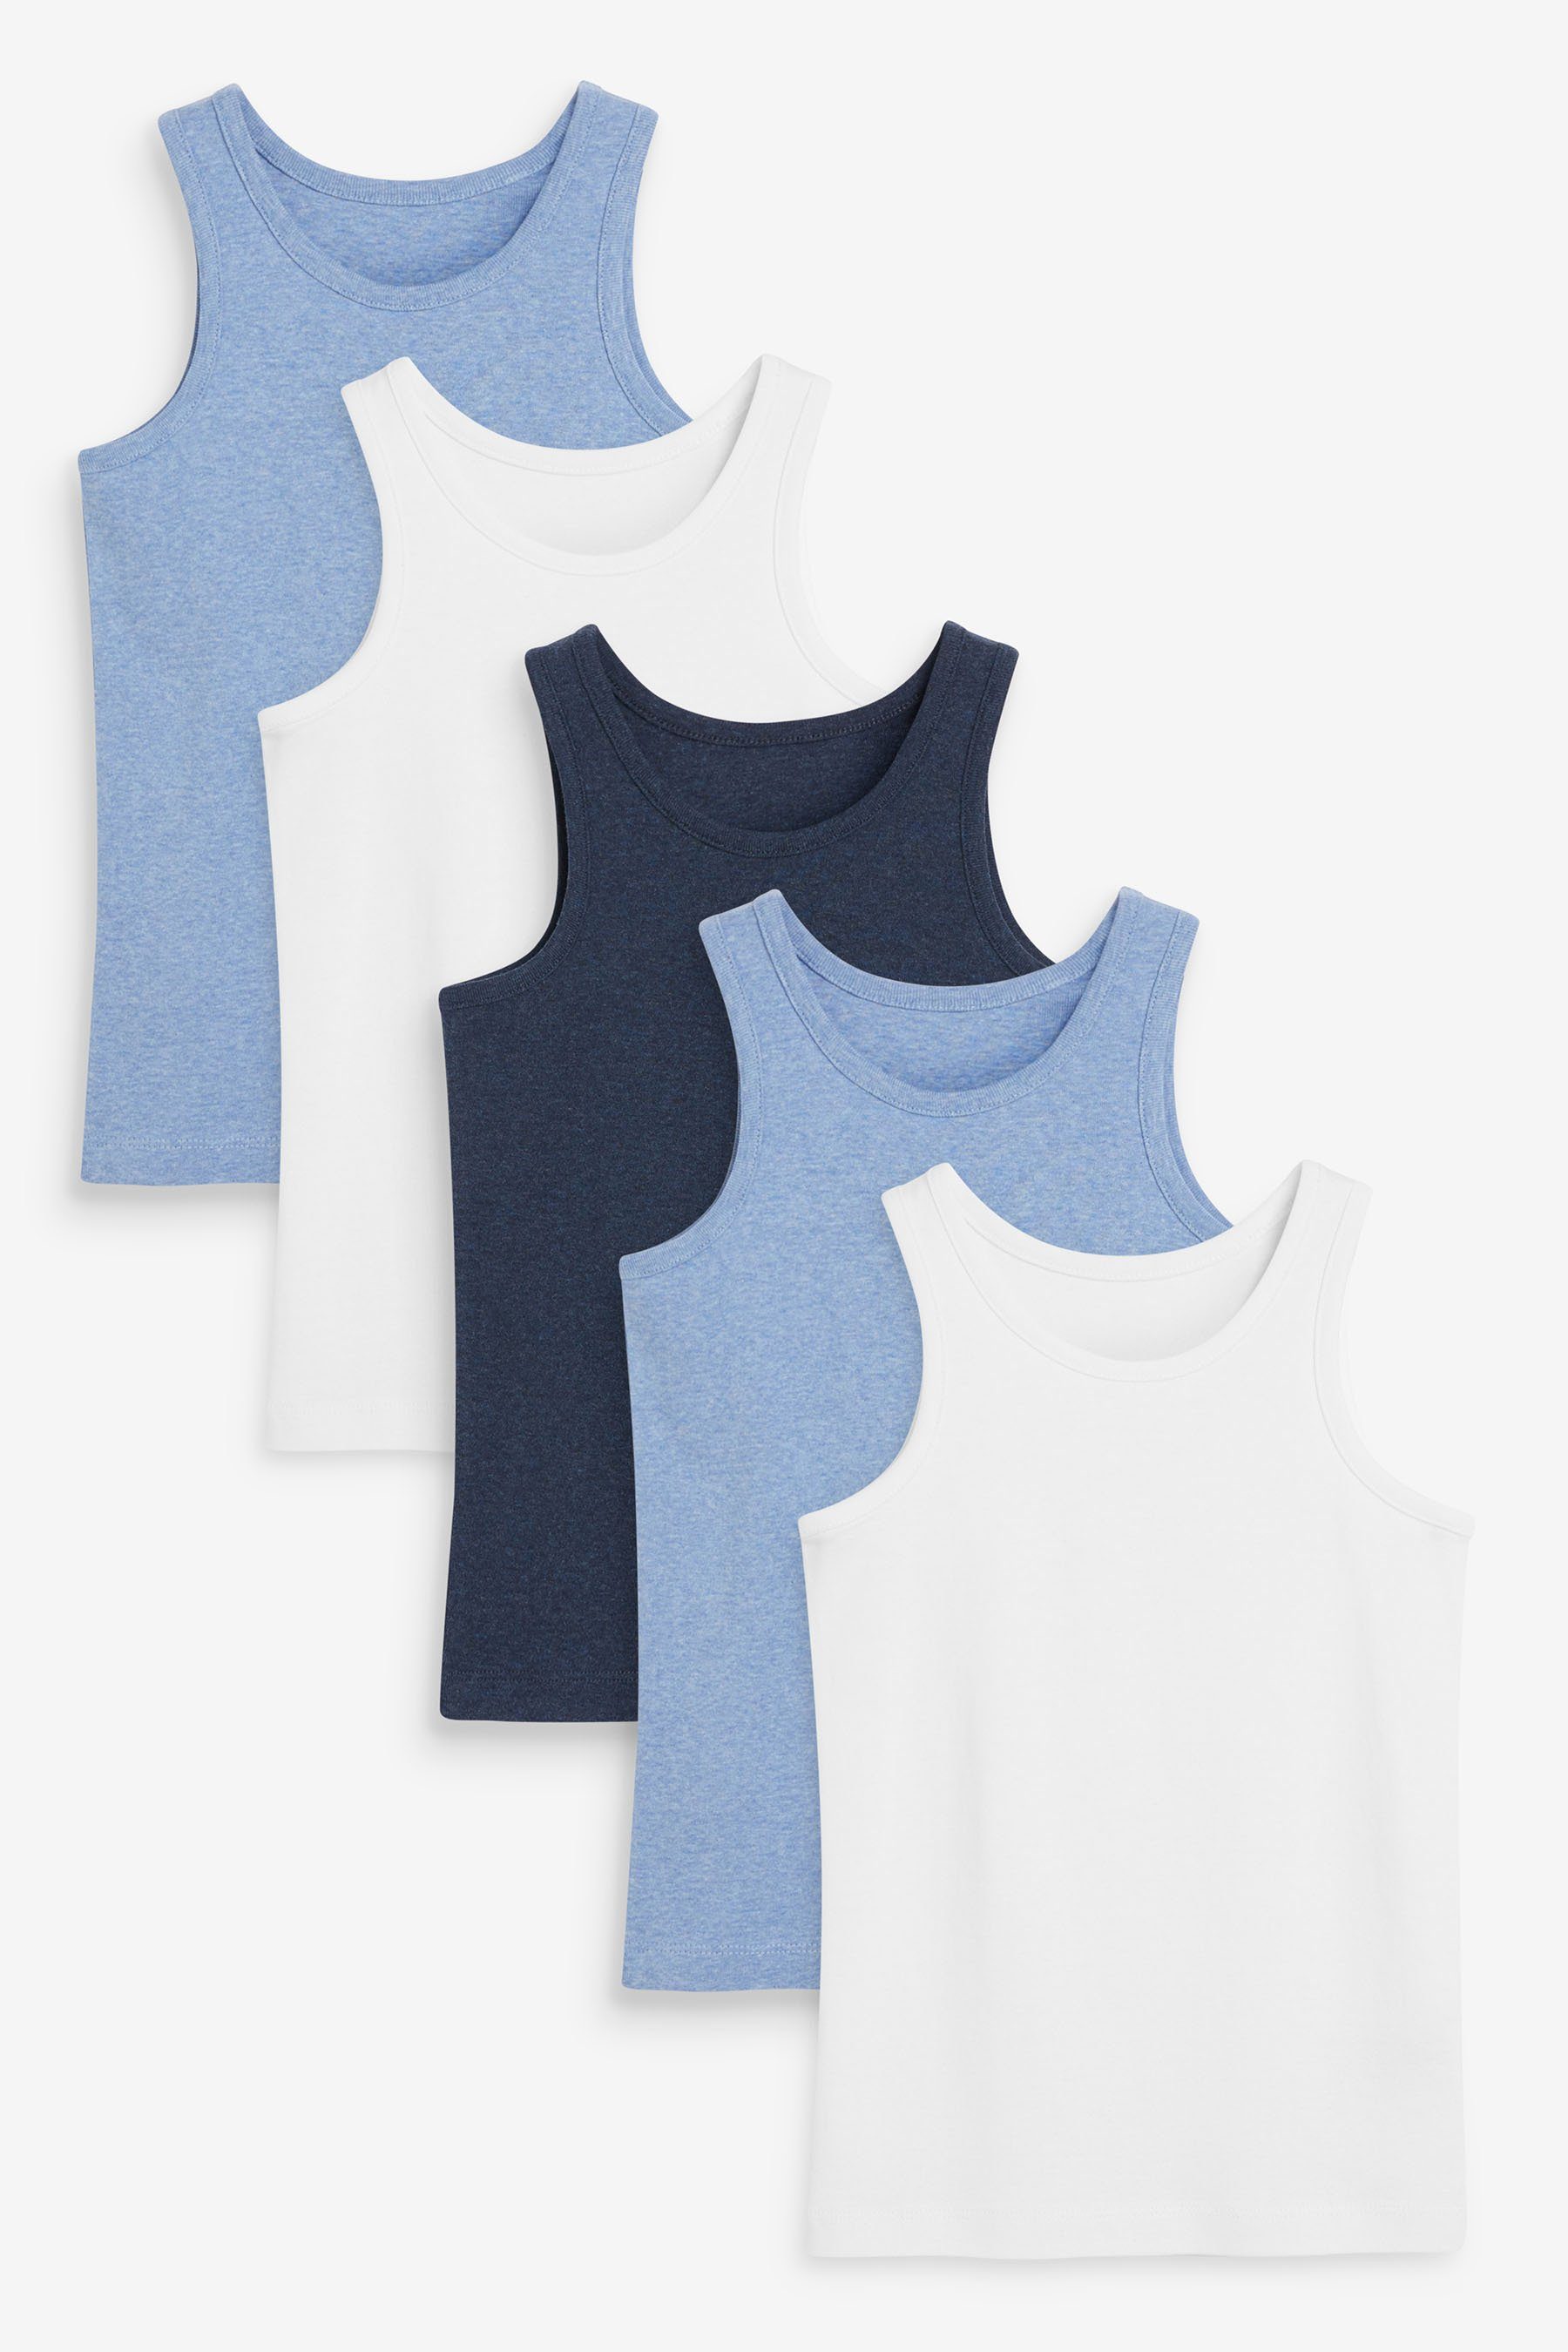 Next Unterhemd Unterhemden aus, 5er-Pack (5-St) Blue/Grey | Unterhemden